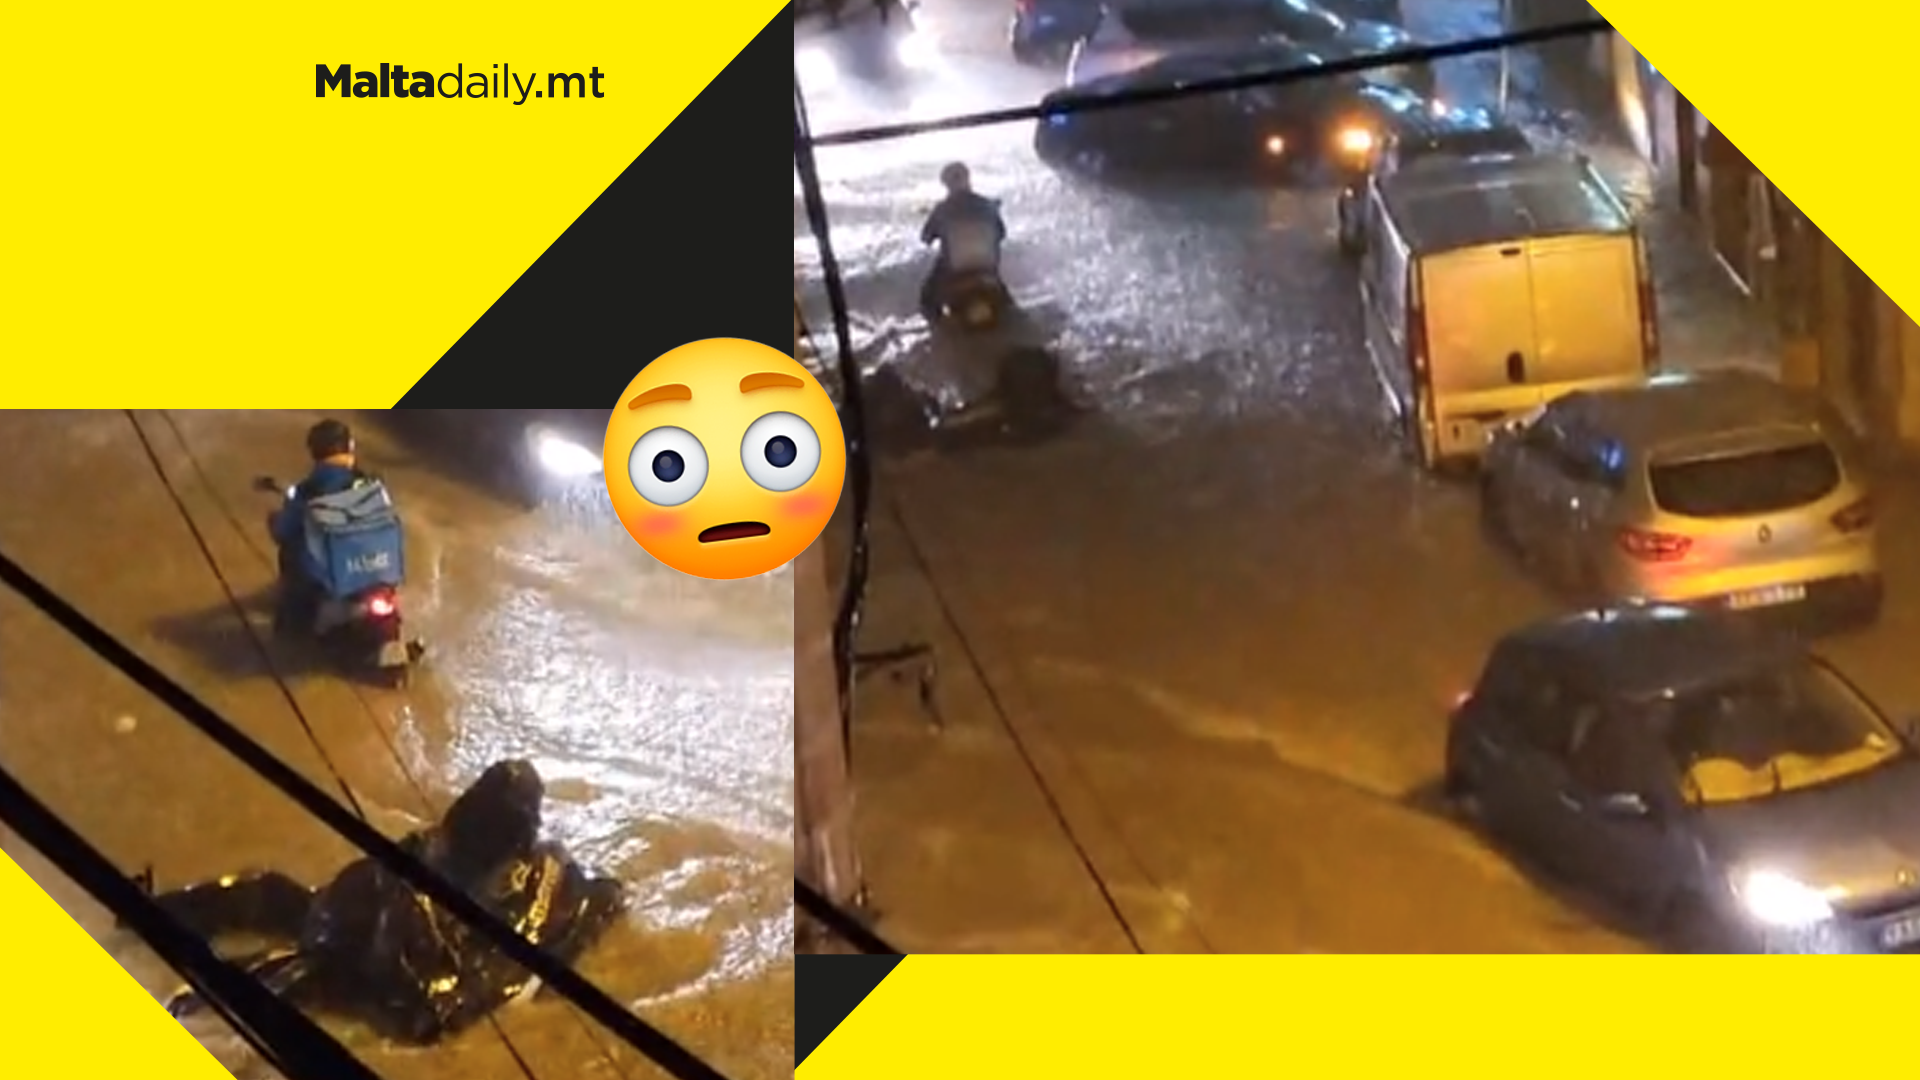 Motorists find difficulty in major road flooding across Malta